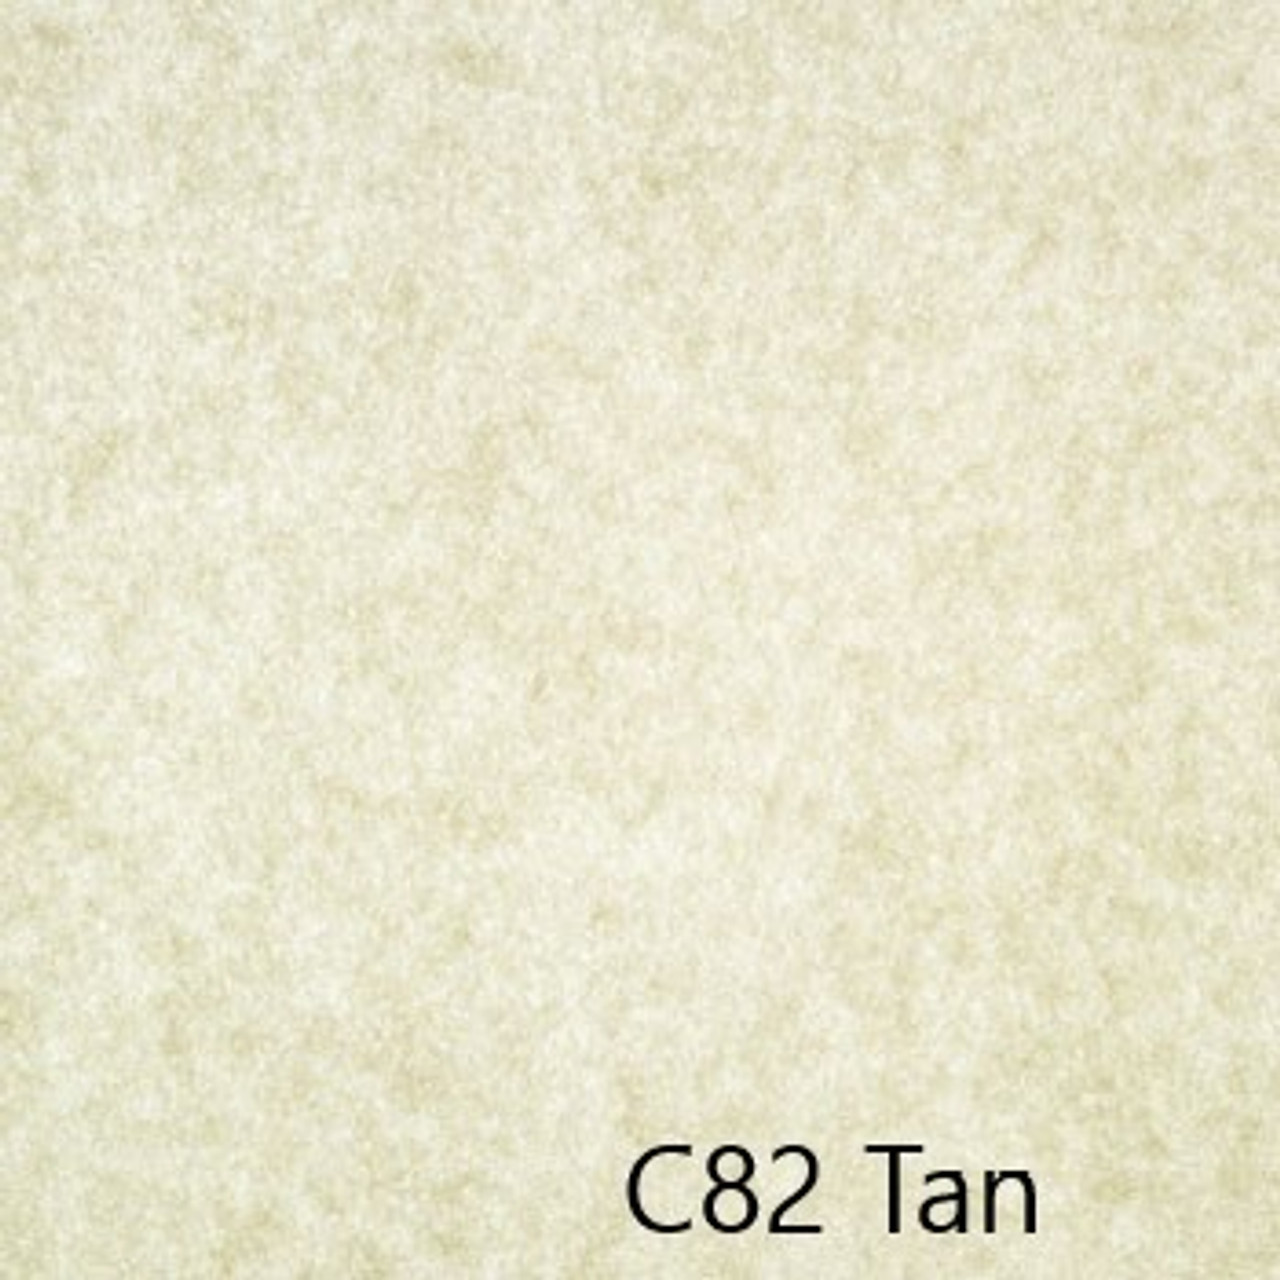 Laminated 0.2mm Tan